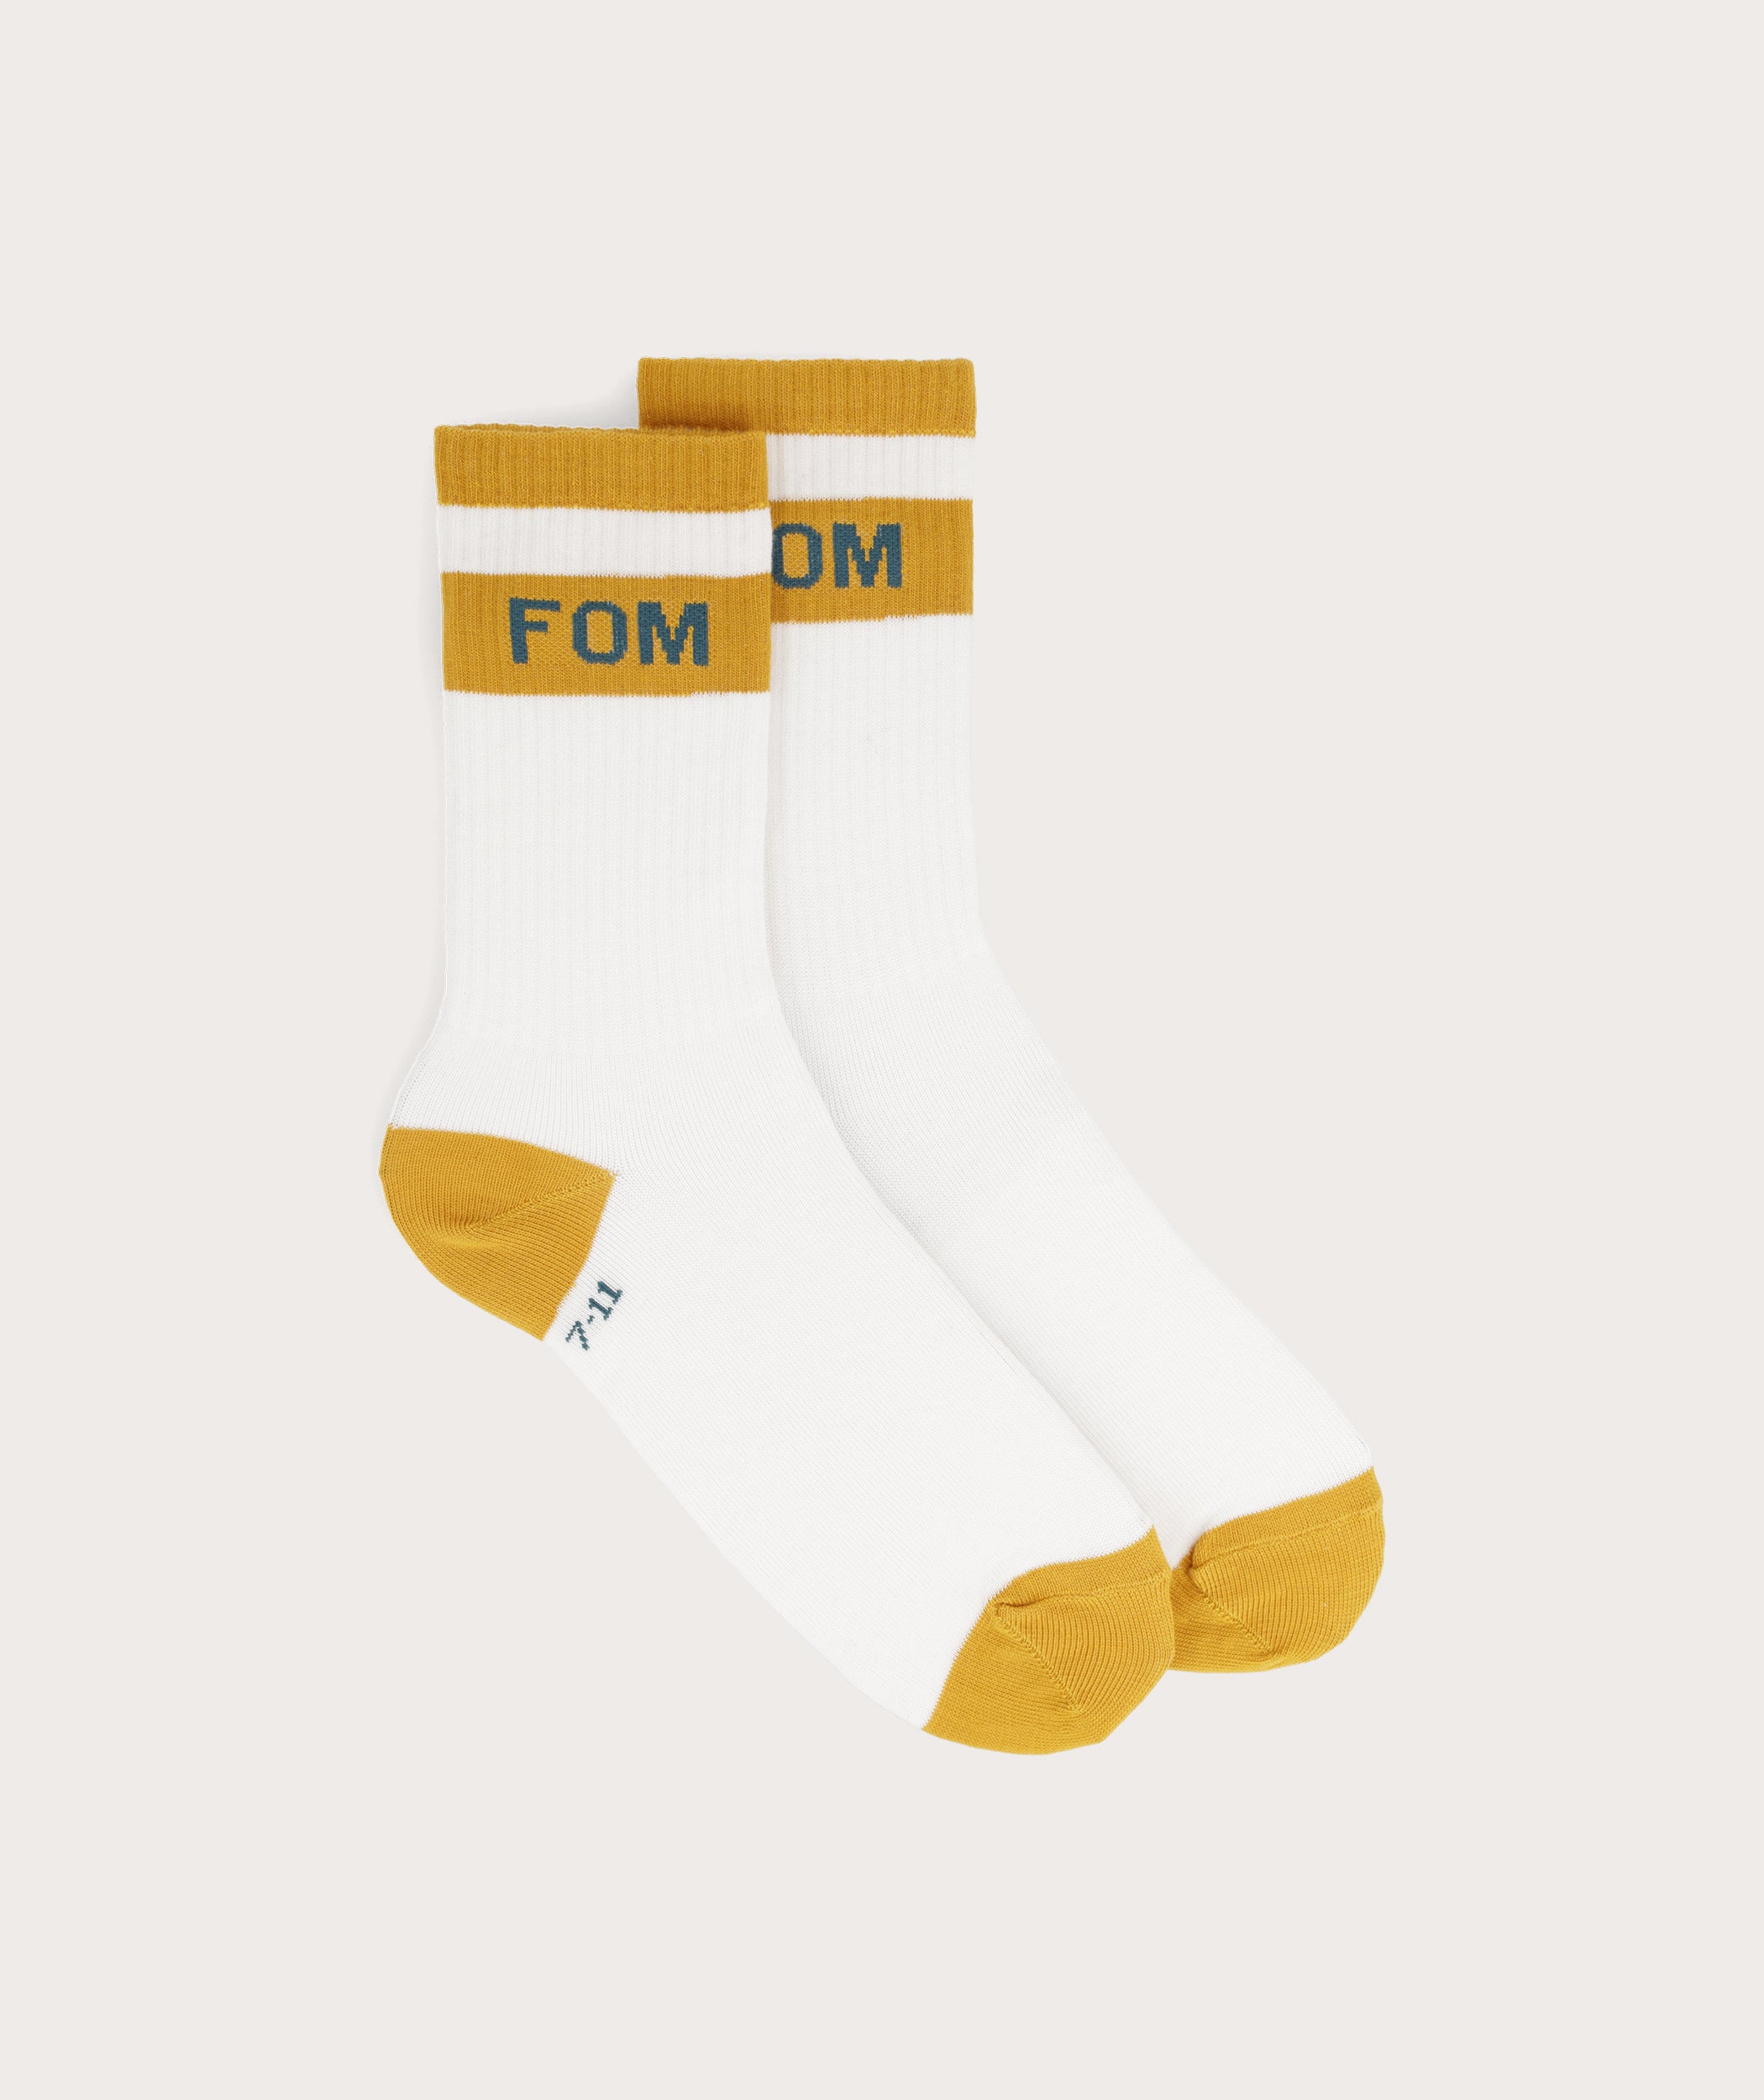 Socks FOM Crew - Cream & Mustard (Size 7-11)